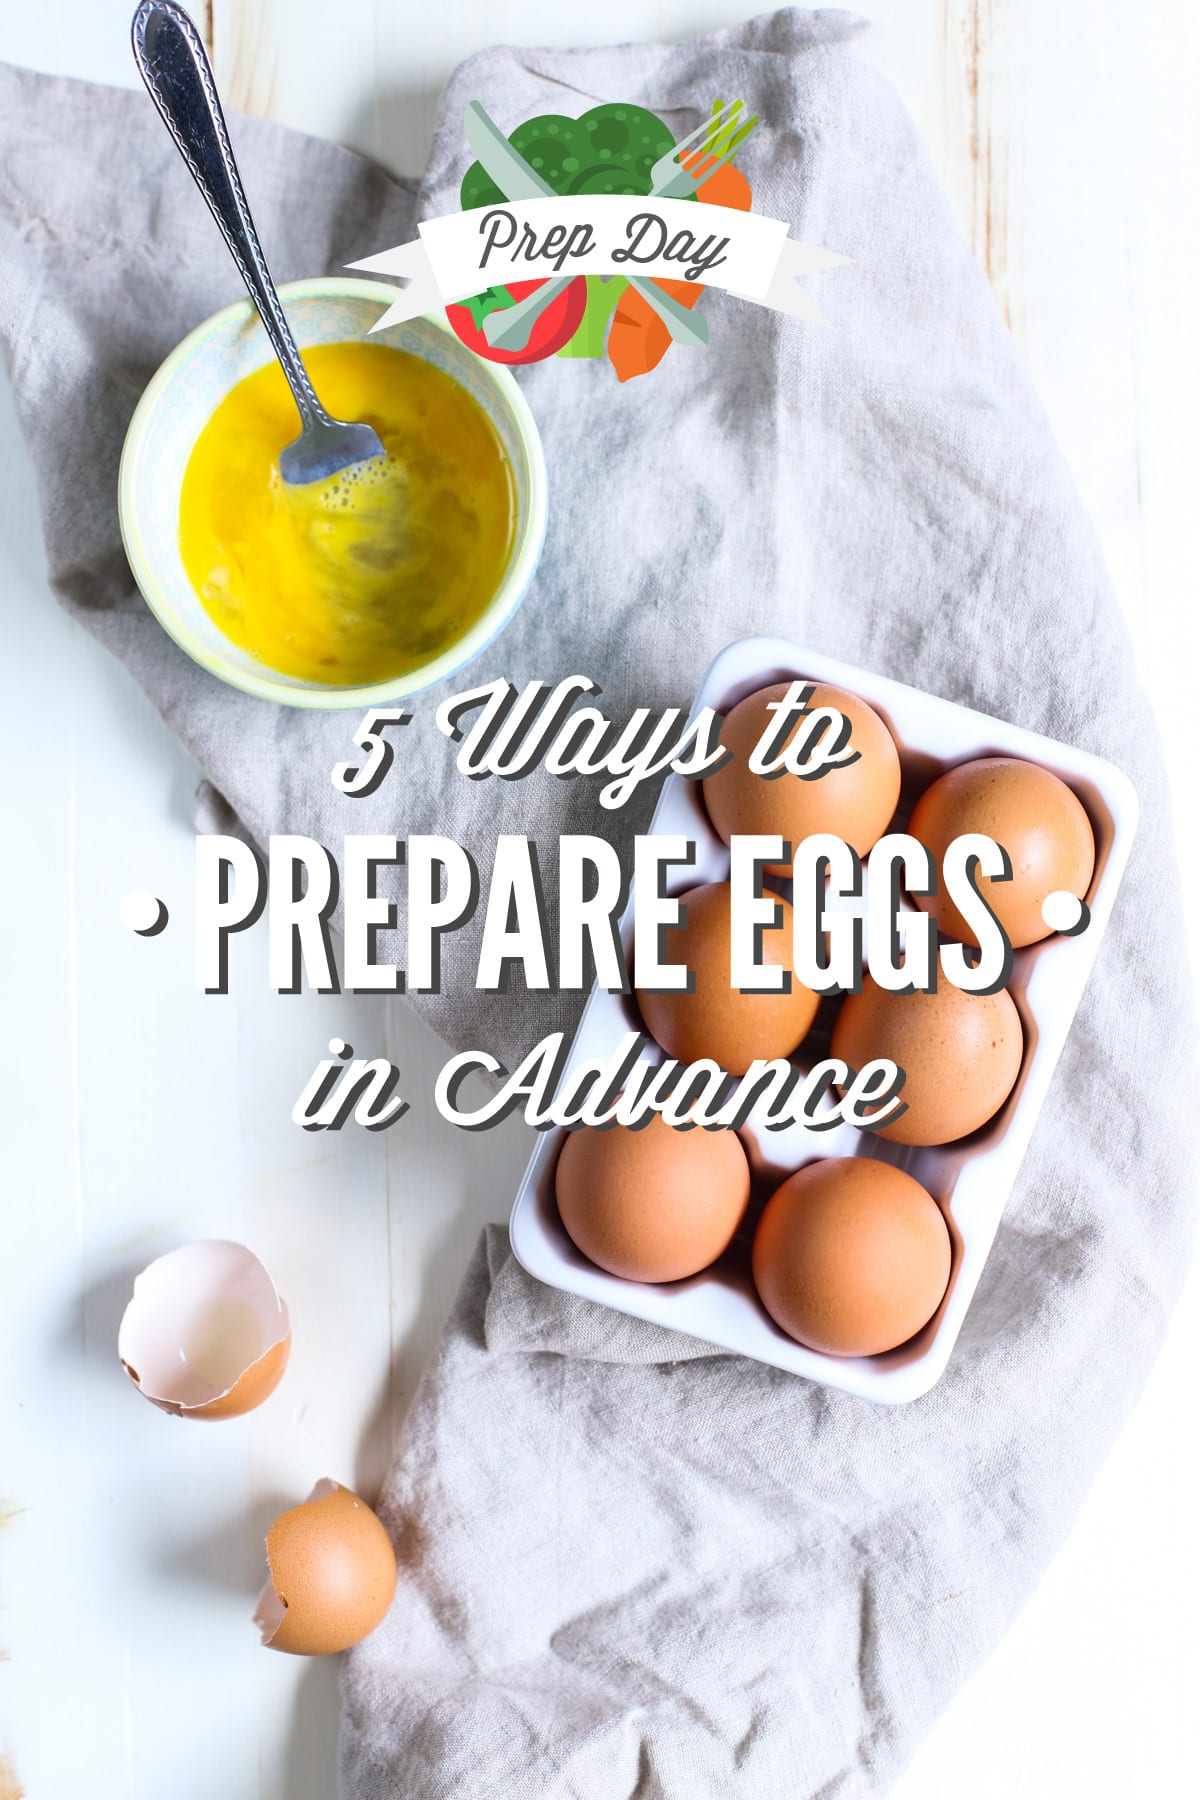 Prep Day: 5 Ways to Prepare Eggs In Advance - Live Simply